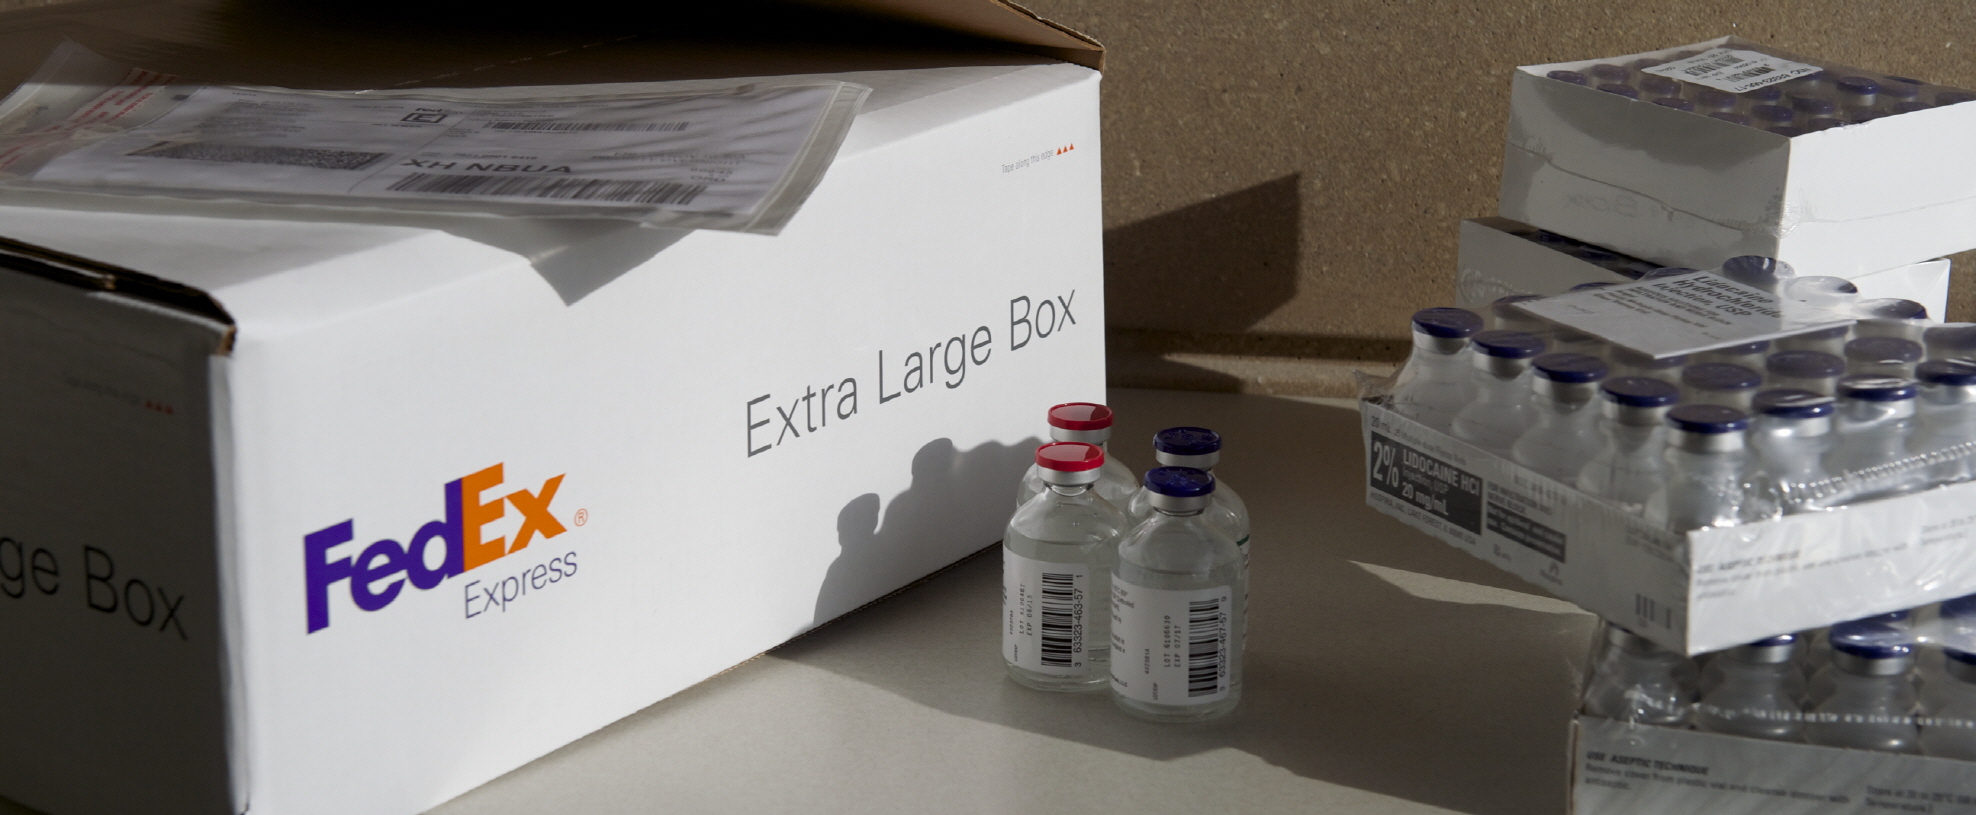 FedEx, 콜드체인센터 개관…헬스케어 물류 서비스 강화